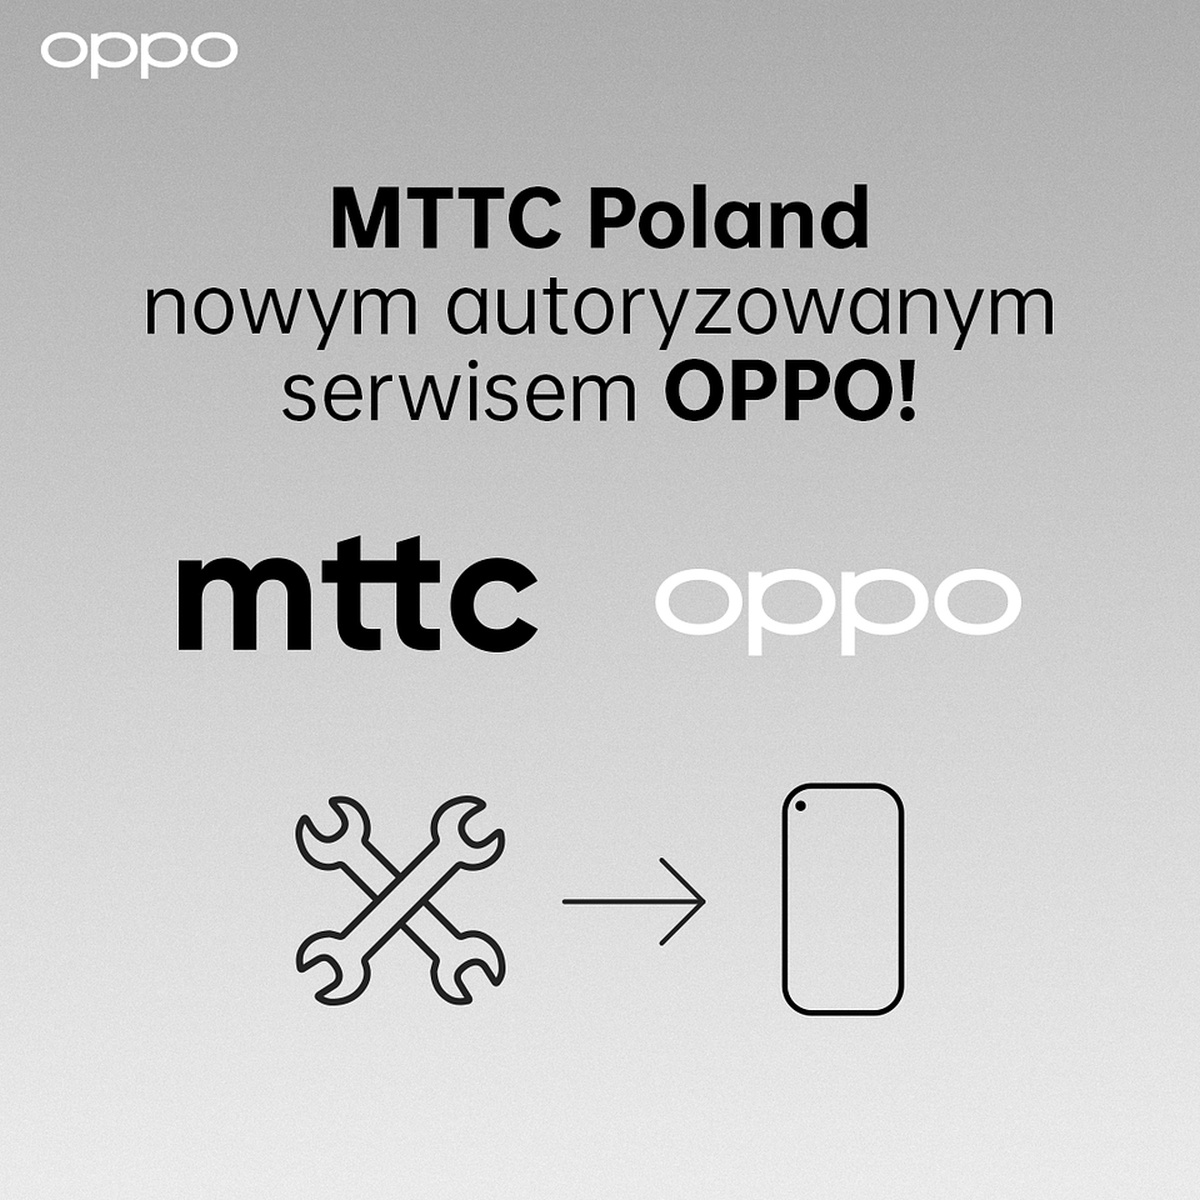 Oppo MTTC Poland baner